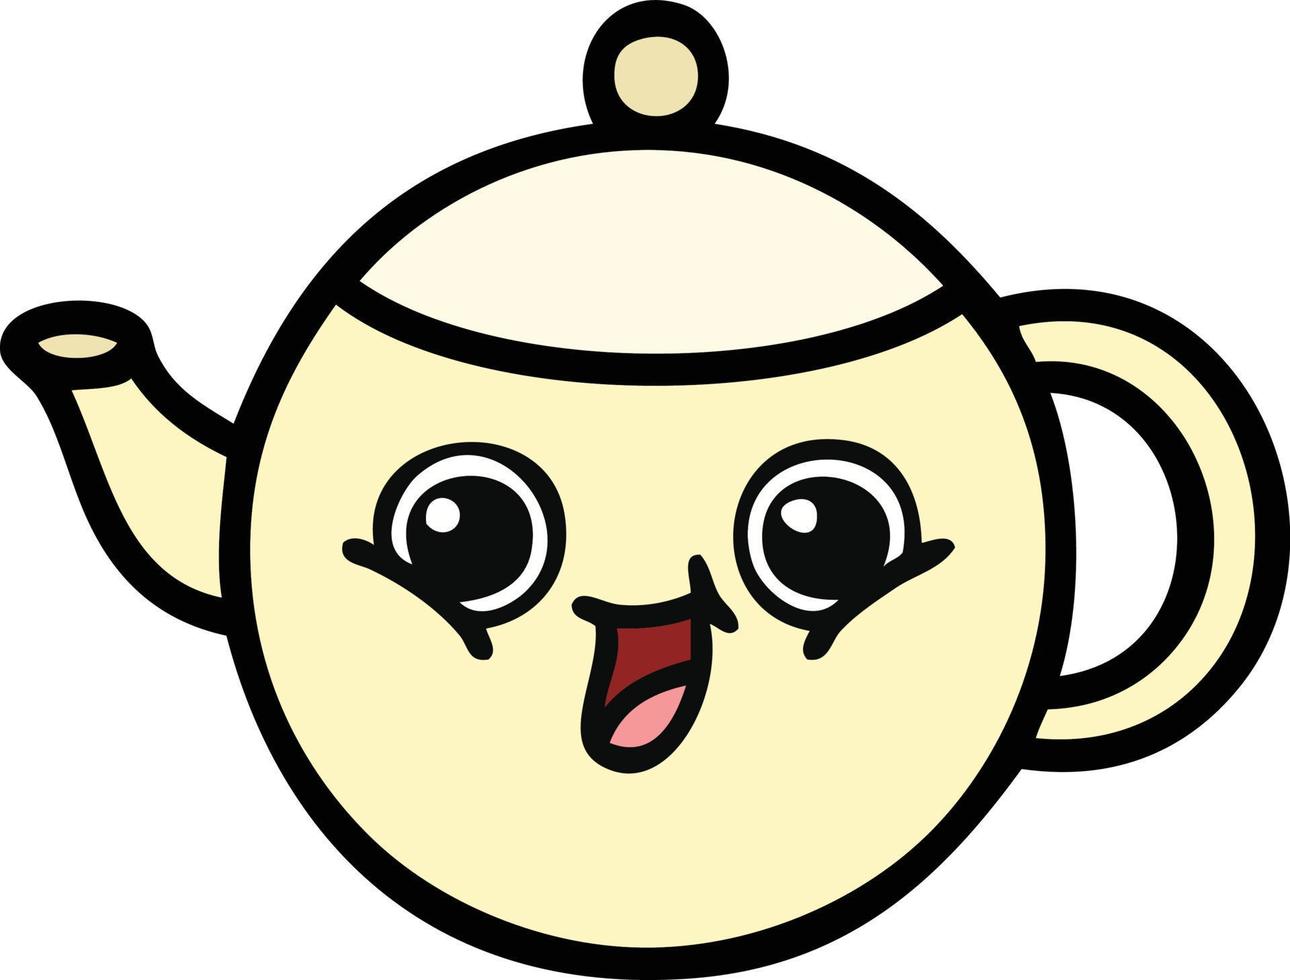 https://static.vecteezy.com/system/resources/previews/010/733/570/non_2x/cute-cartoon-tea-pot-vector.jpg